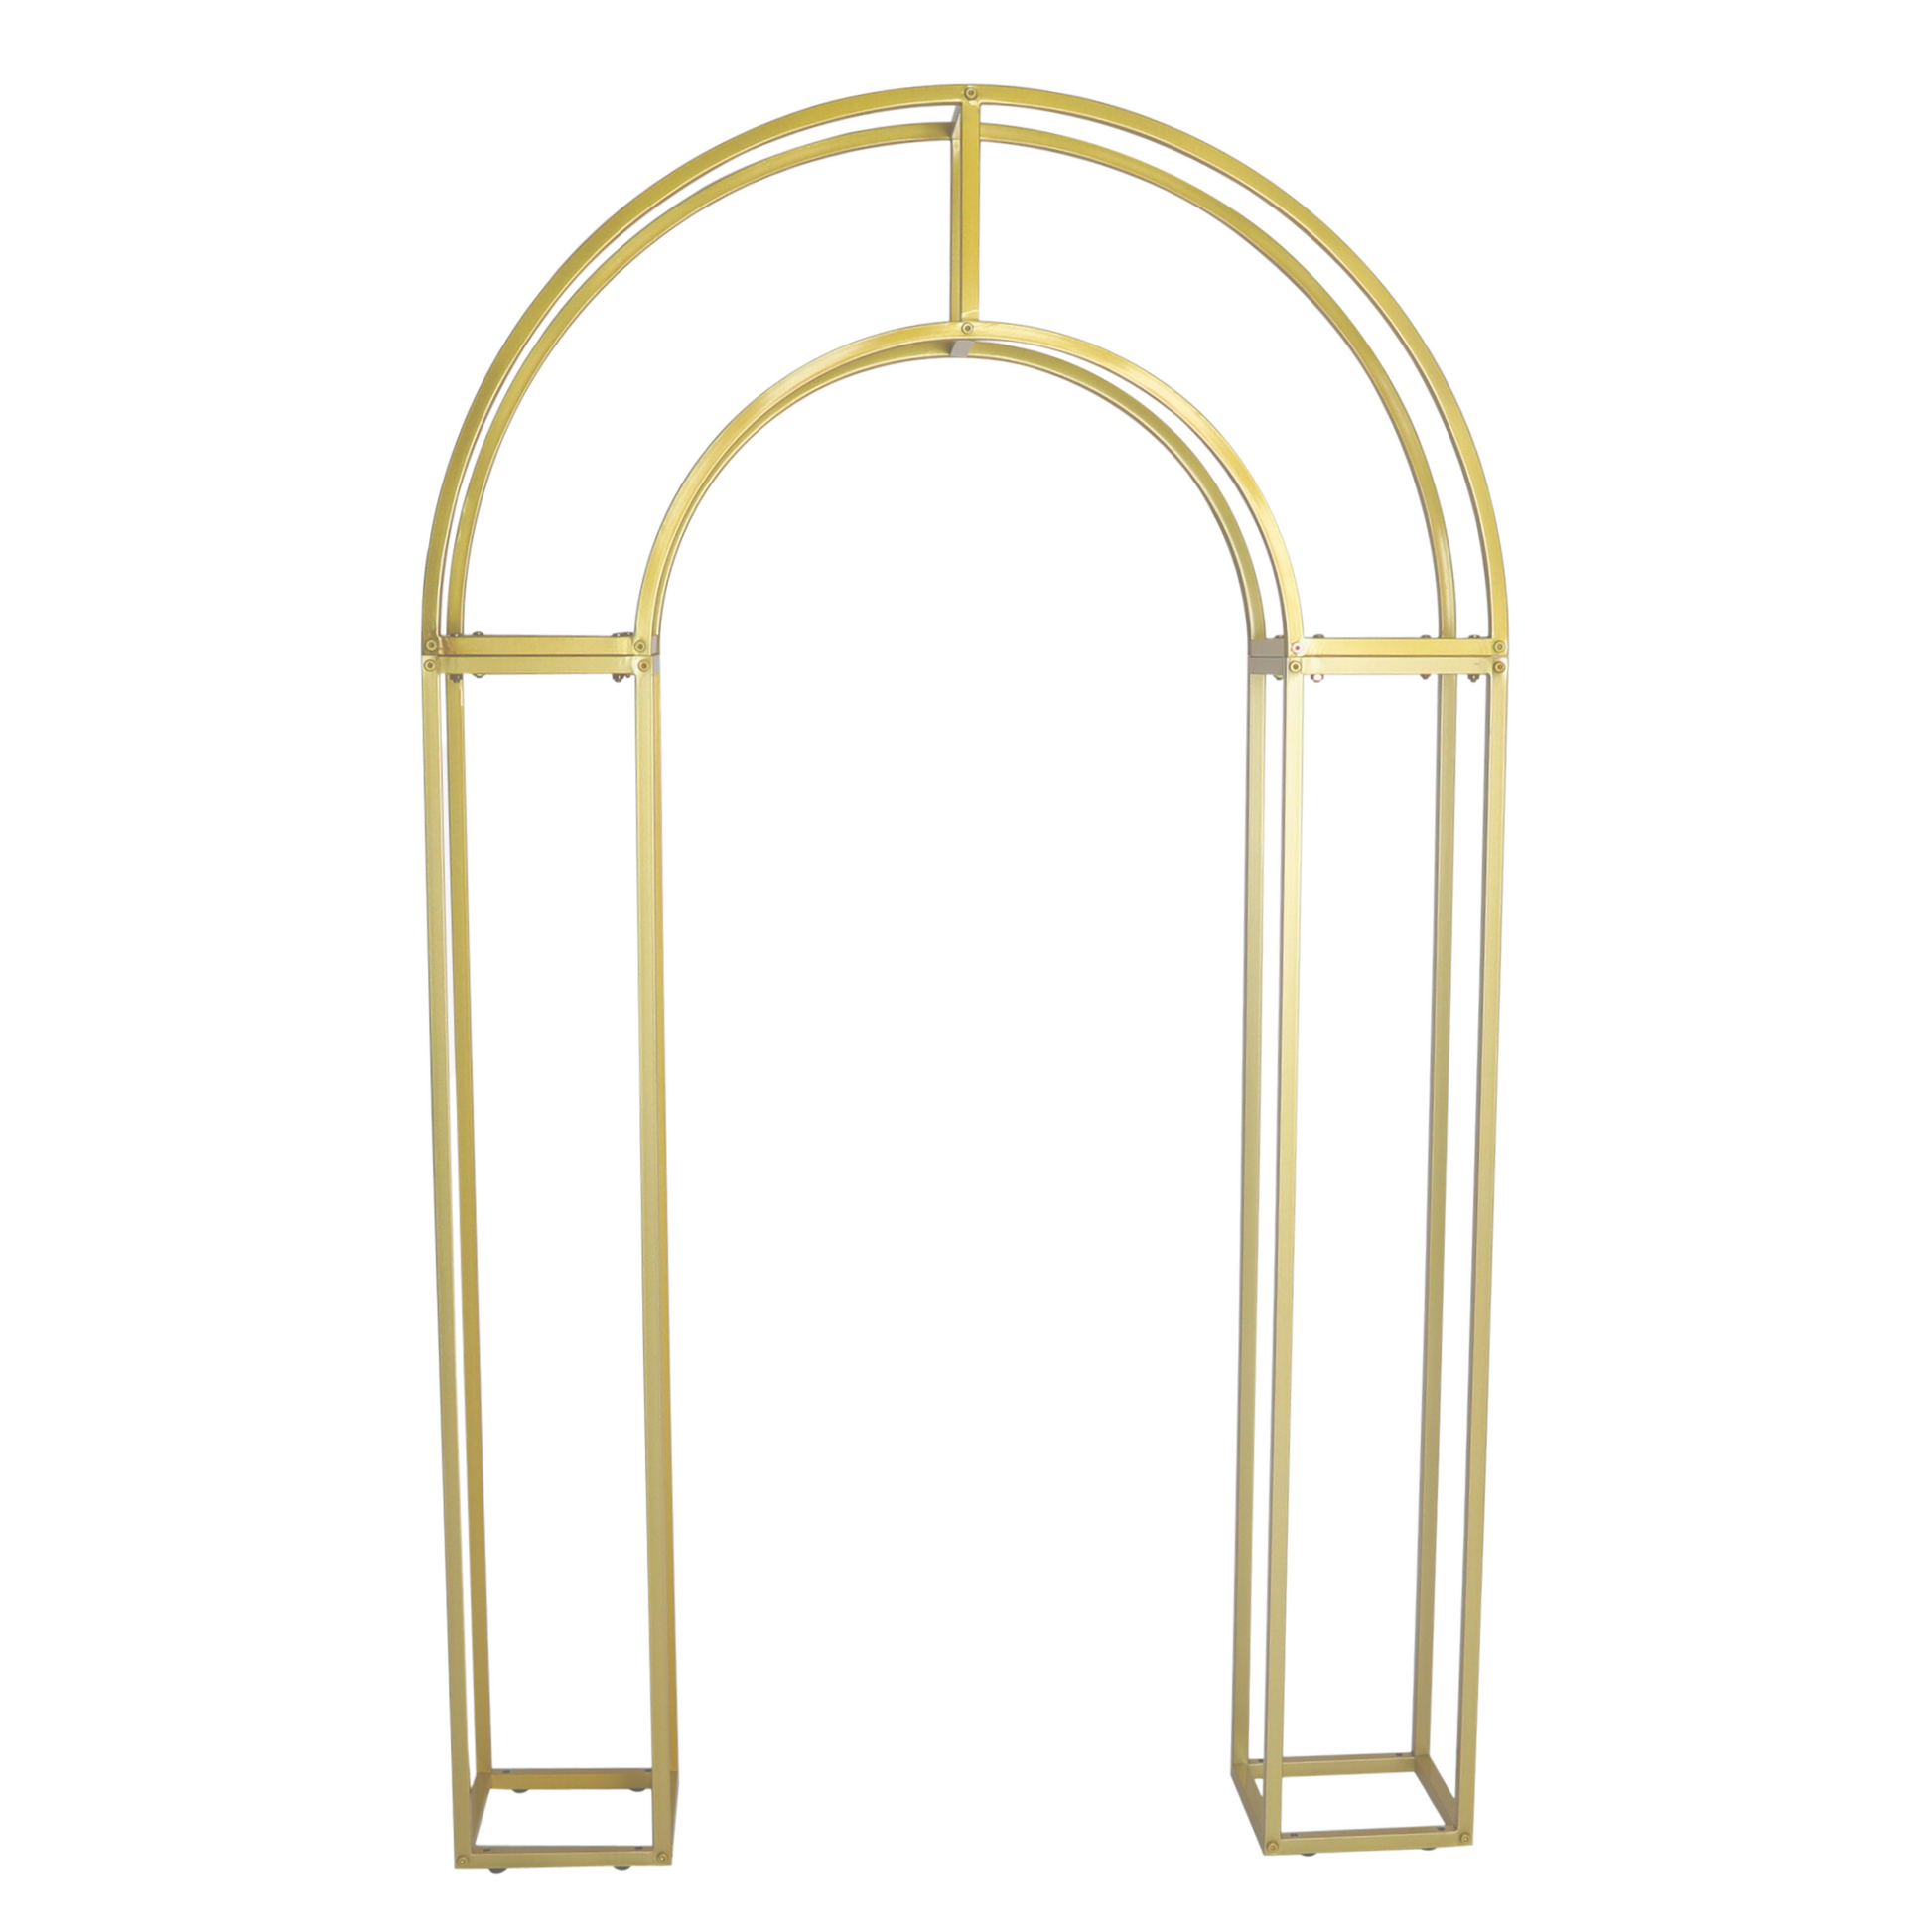 Modern Rectangular Tall Metal Frame Stand Centerpiece (3 PCs/Set) in Gold | Wedding | Event | Wholesale by CV Linens